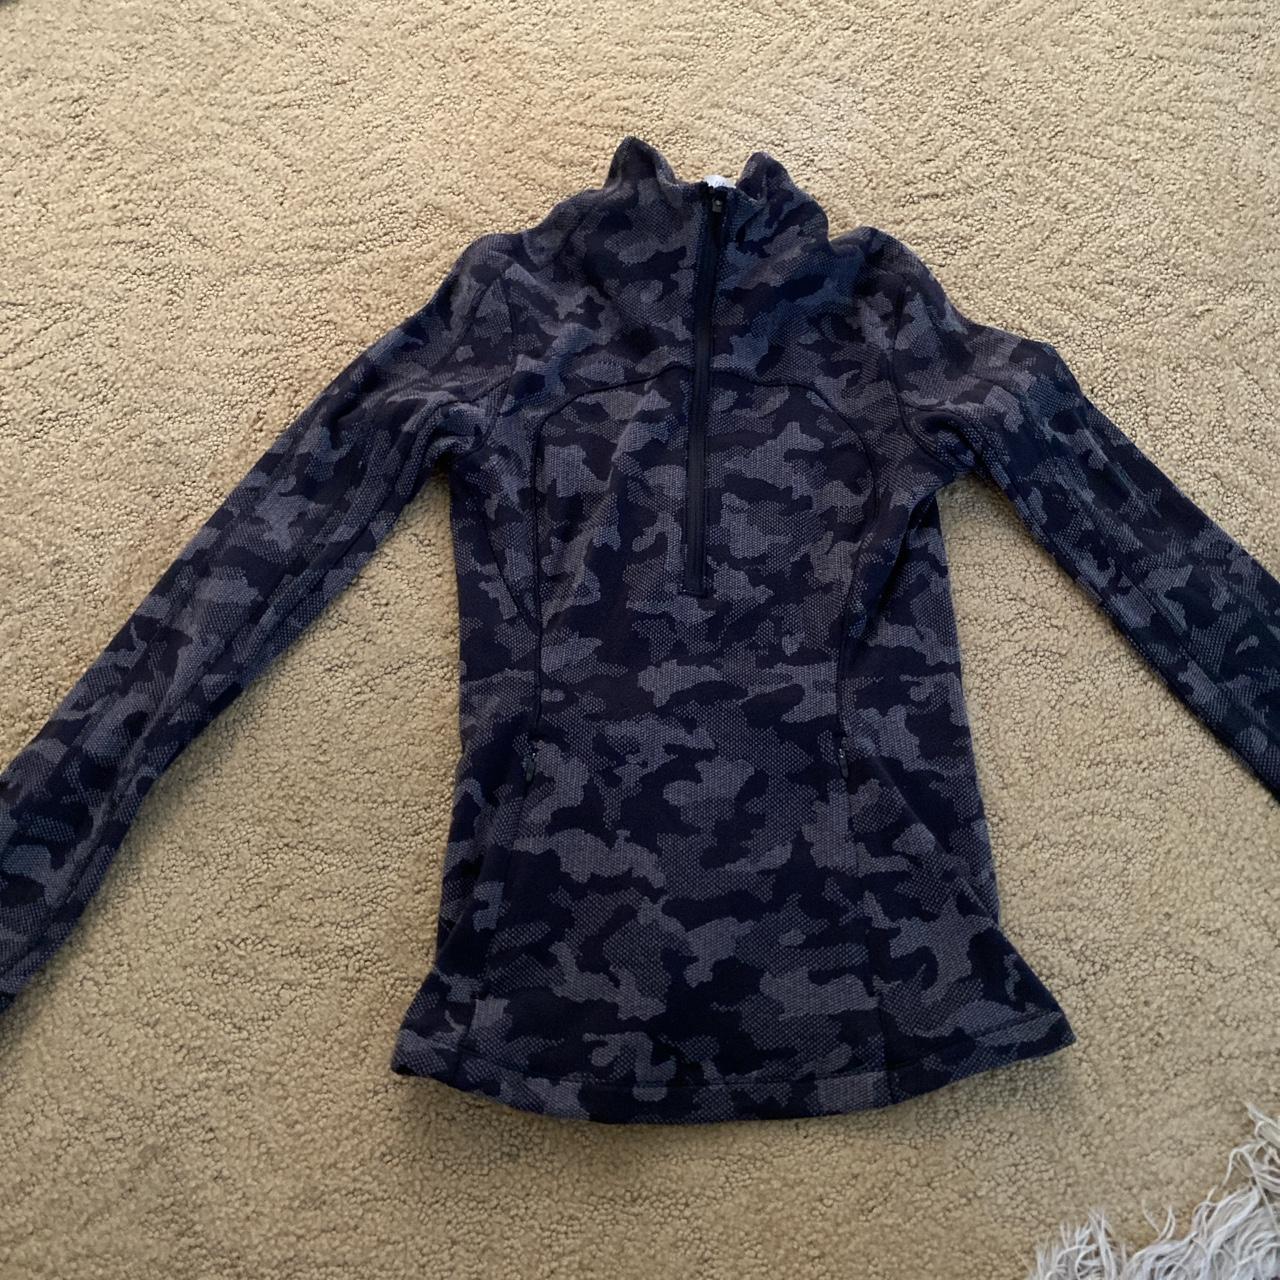 size 2 lululemon define jacket camo - Depop